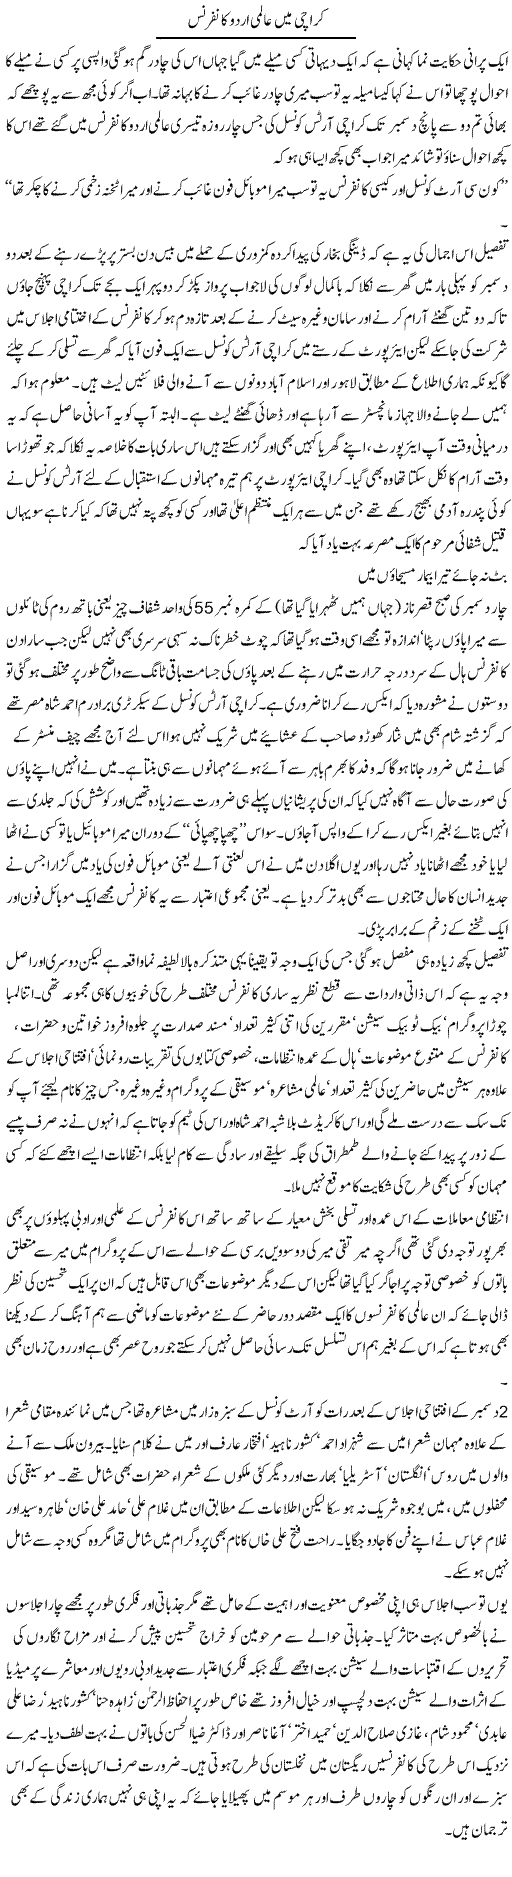 Urdu Conference Express Column Amjad Islam 12 December 2010